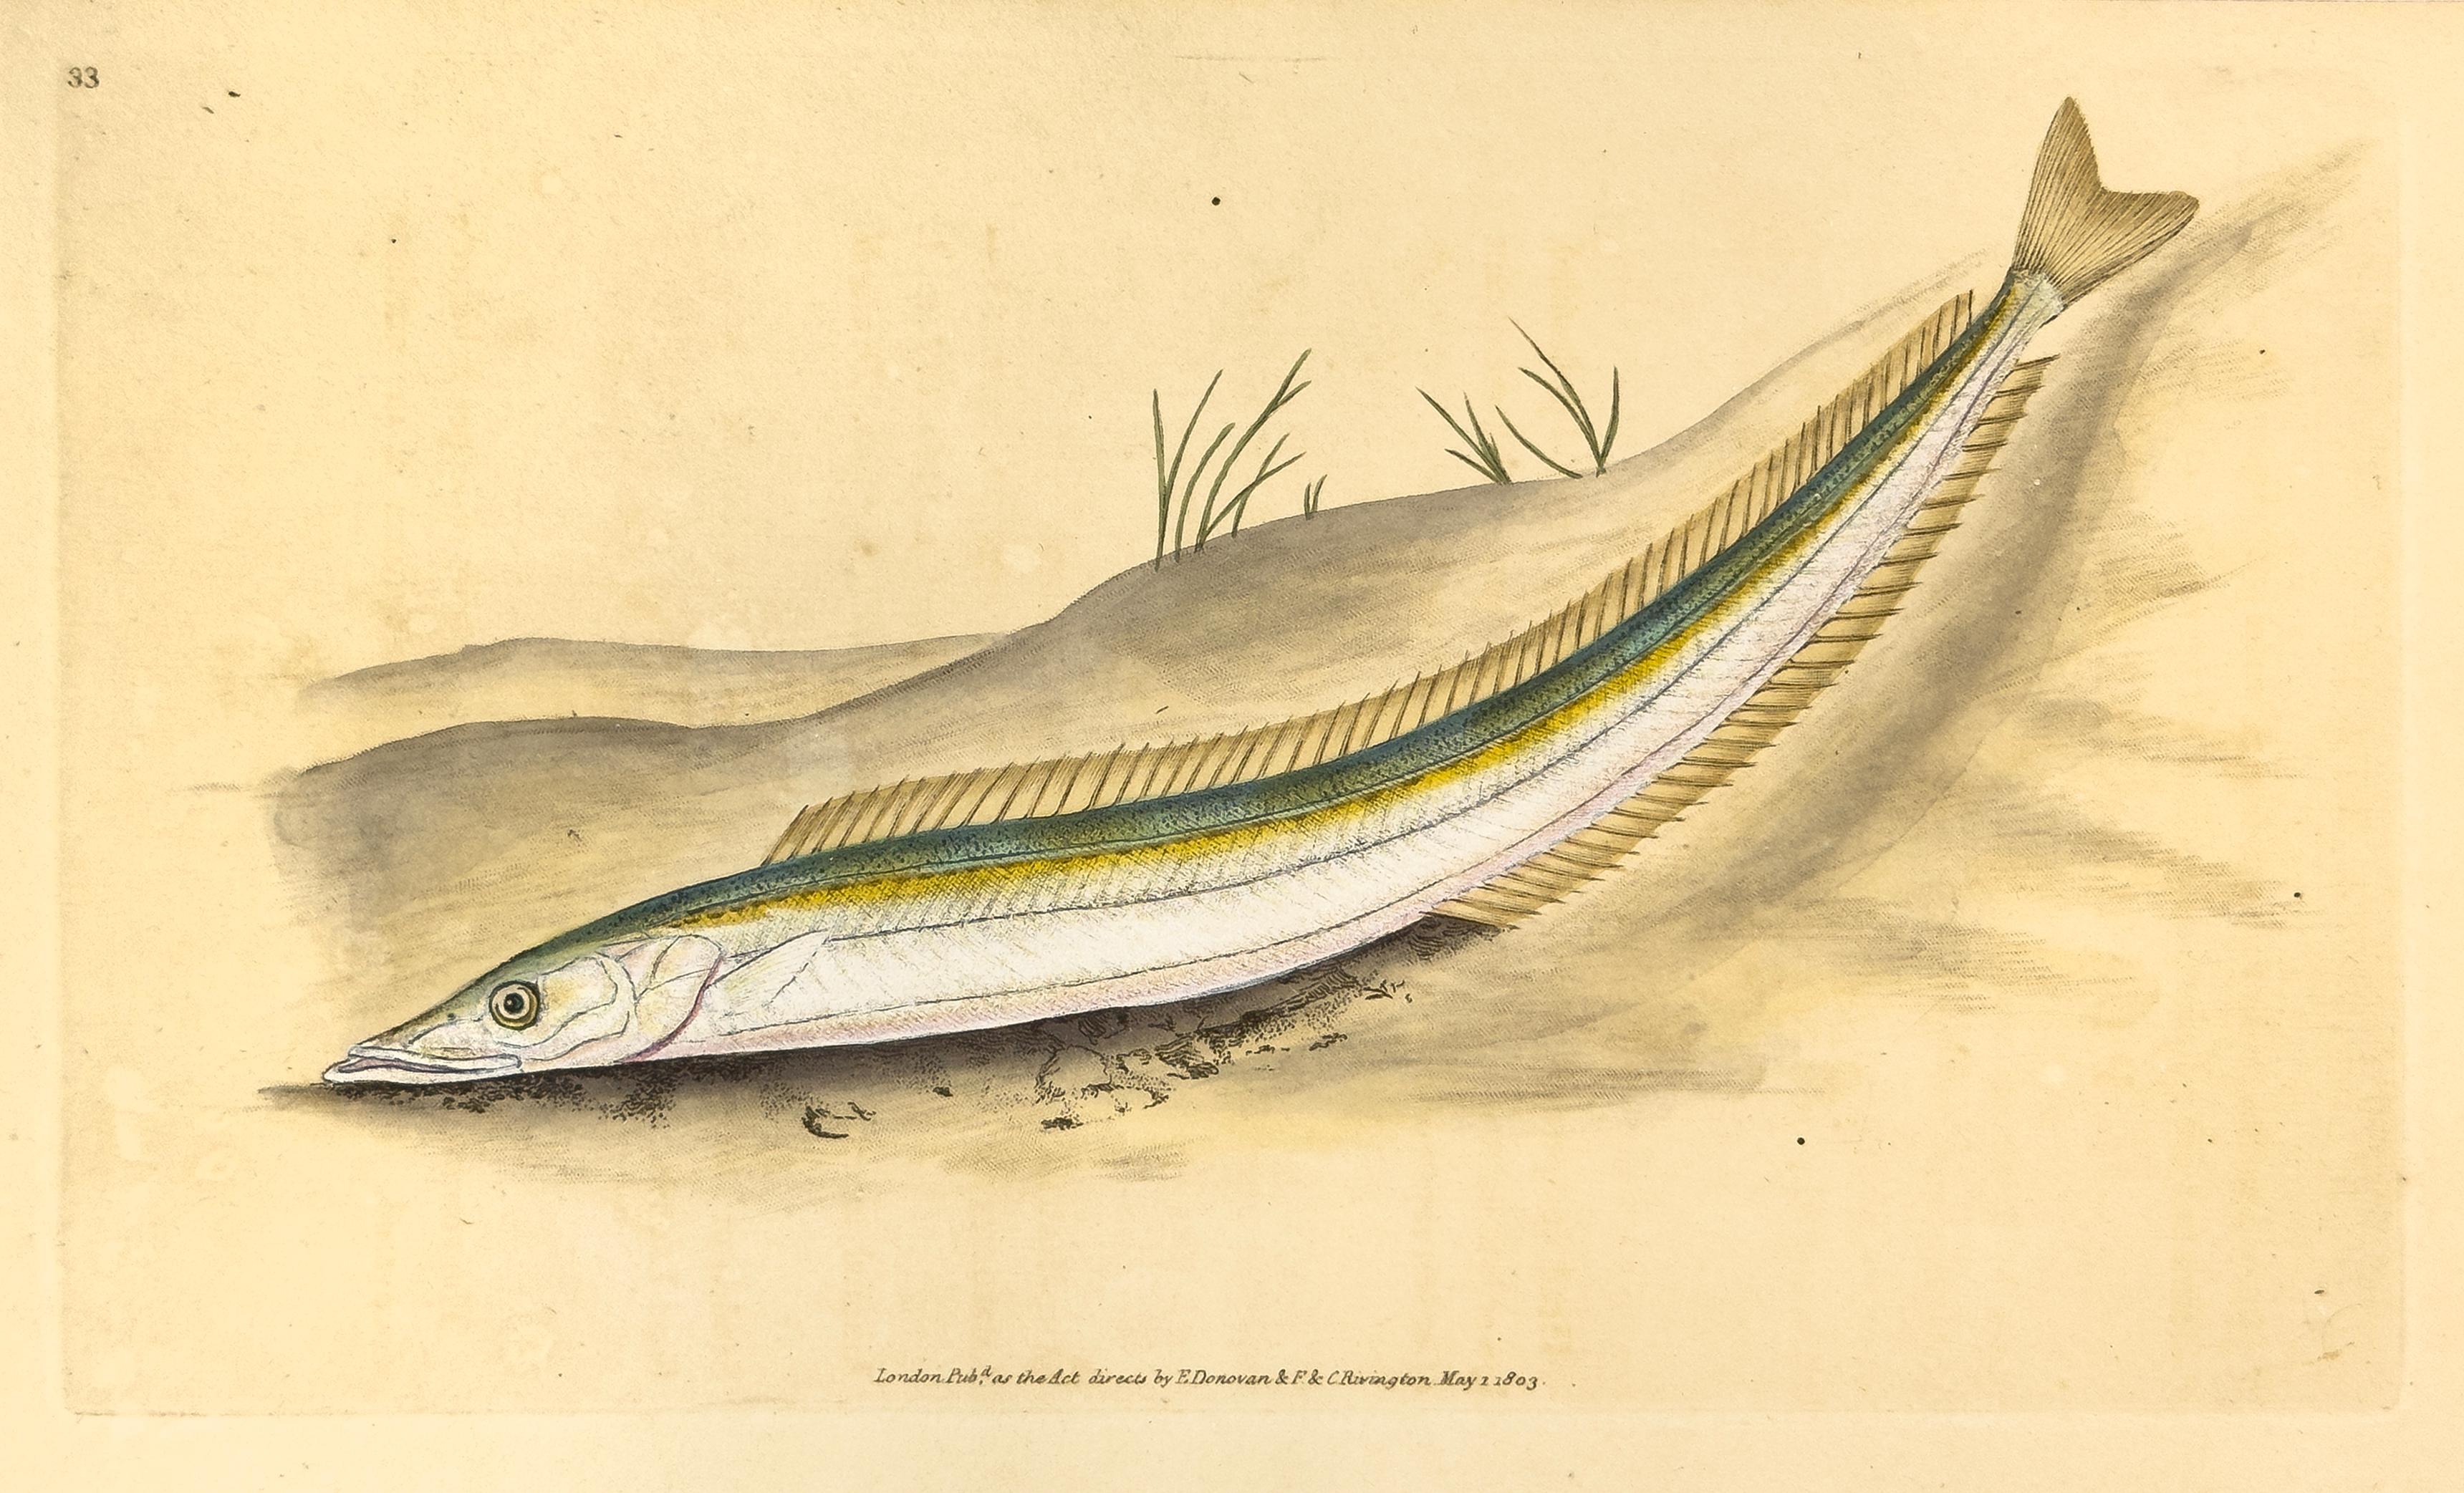 Edward Donovan Animal Print - 33: Ammodytes tobianus, Sand-Launce or Sand-Eel